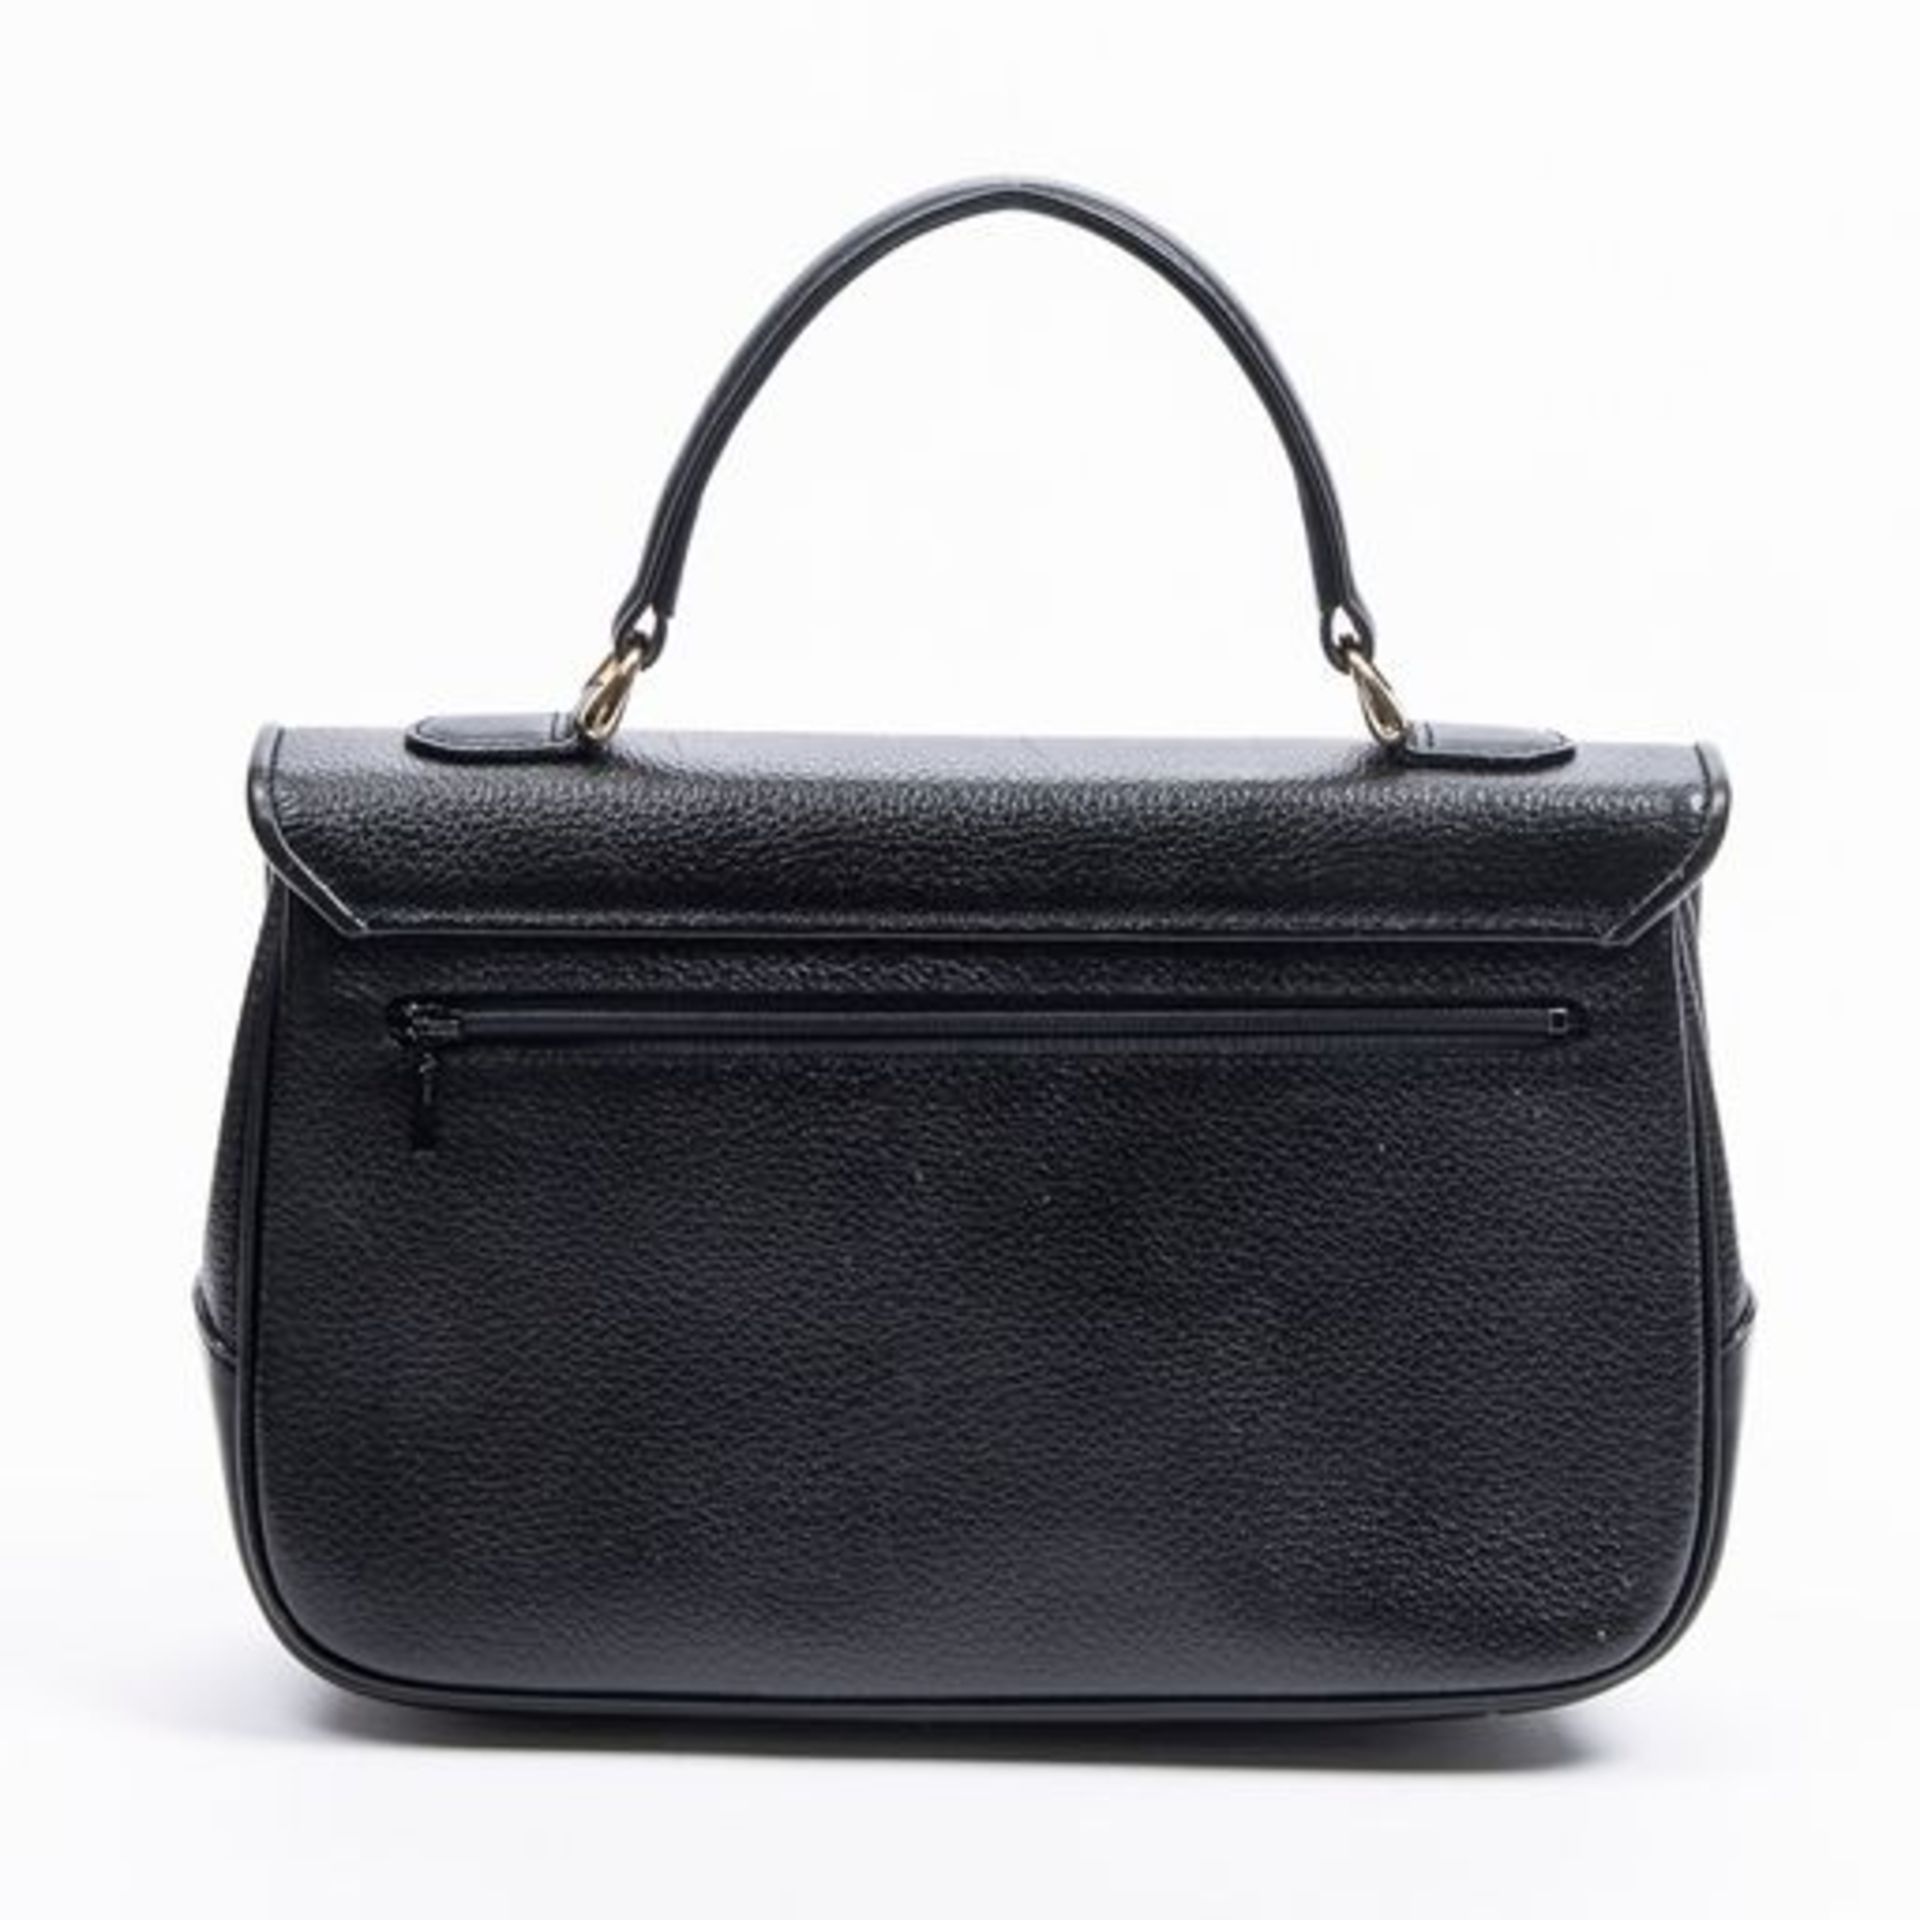 RRP £725 Burberry Burberrys Front Flap Top Handle Handbag Black - AAR9905 - Grade A - (Bags Are - Image 2 of 4